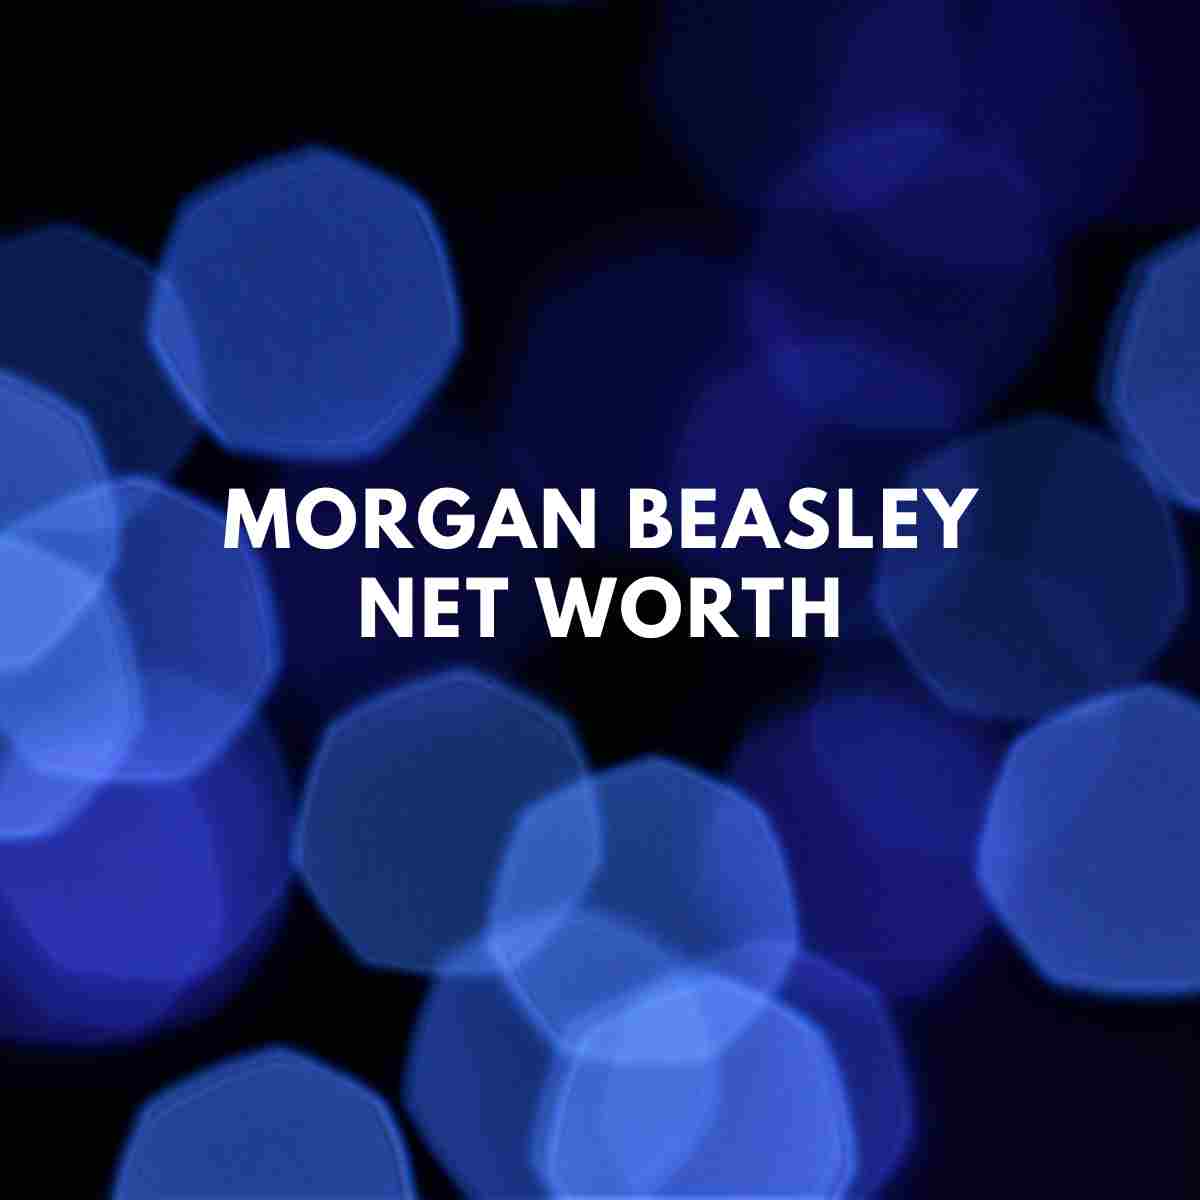 Morgan Beasley net worth